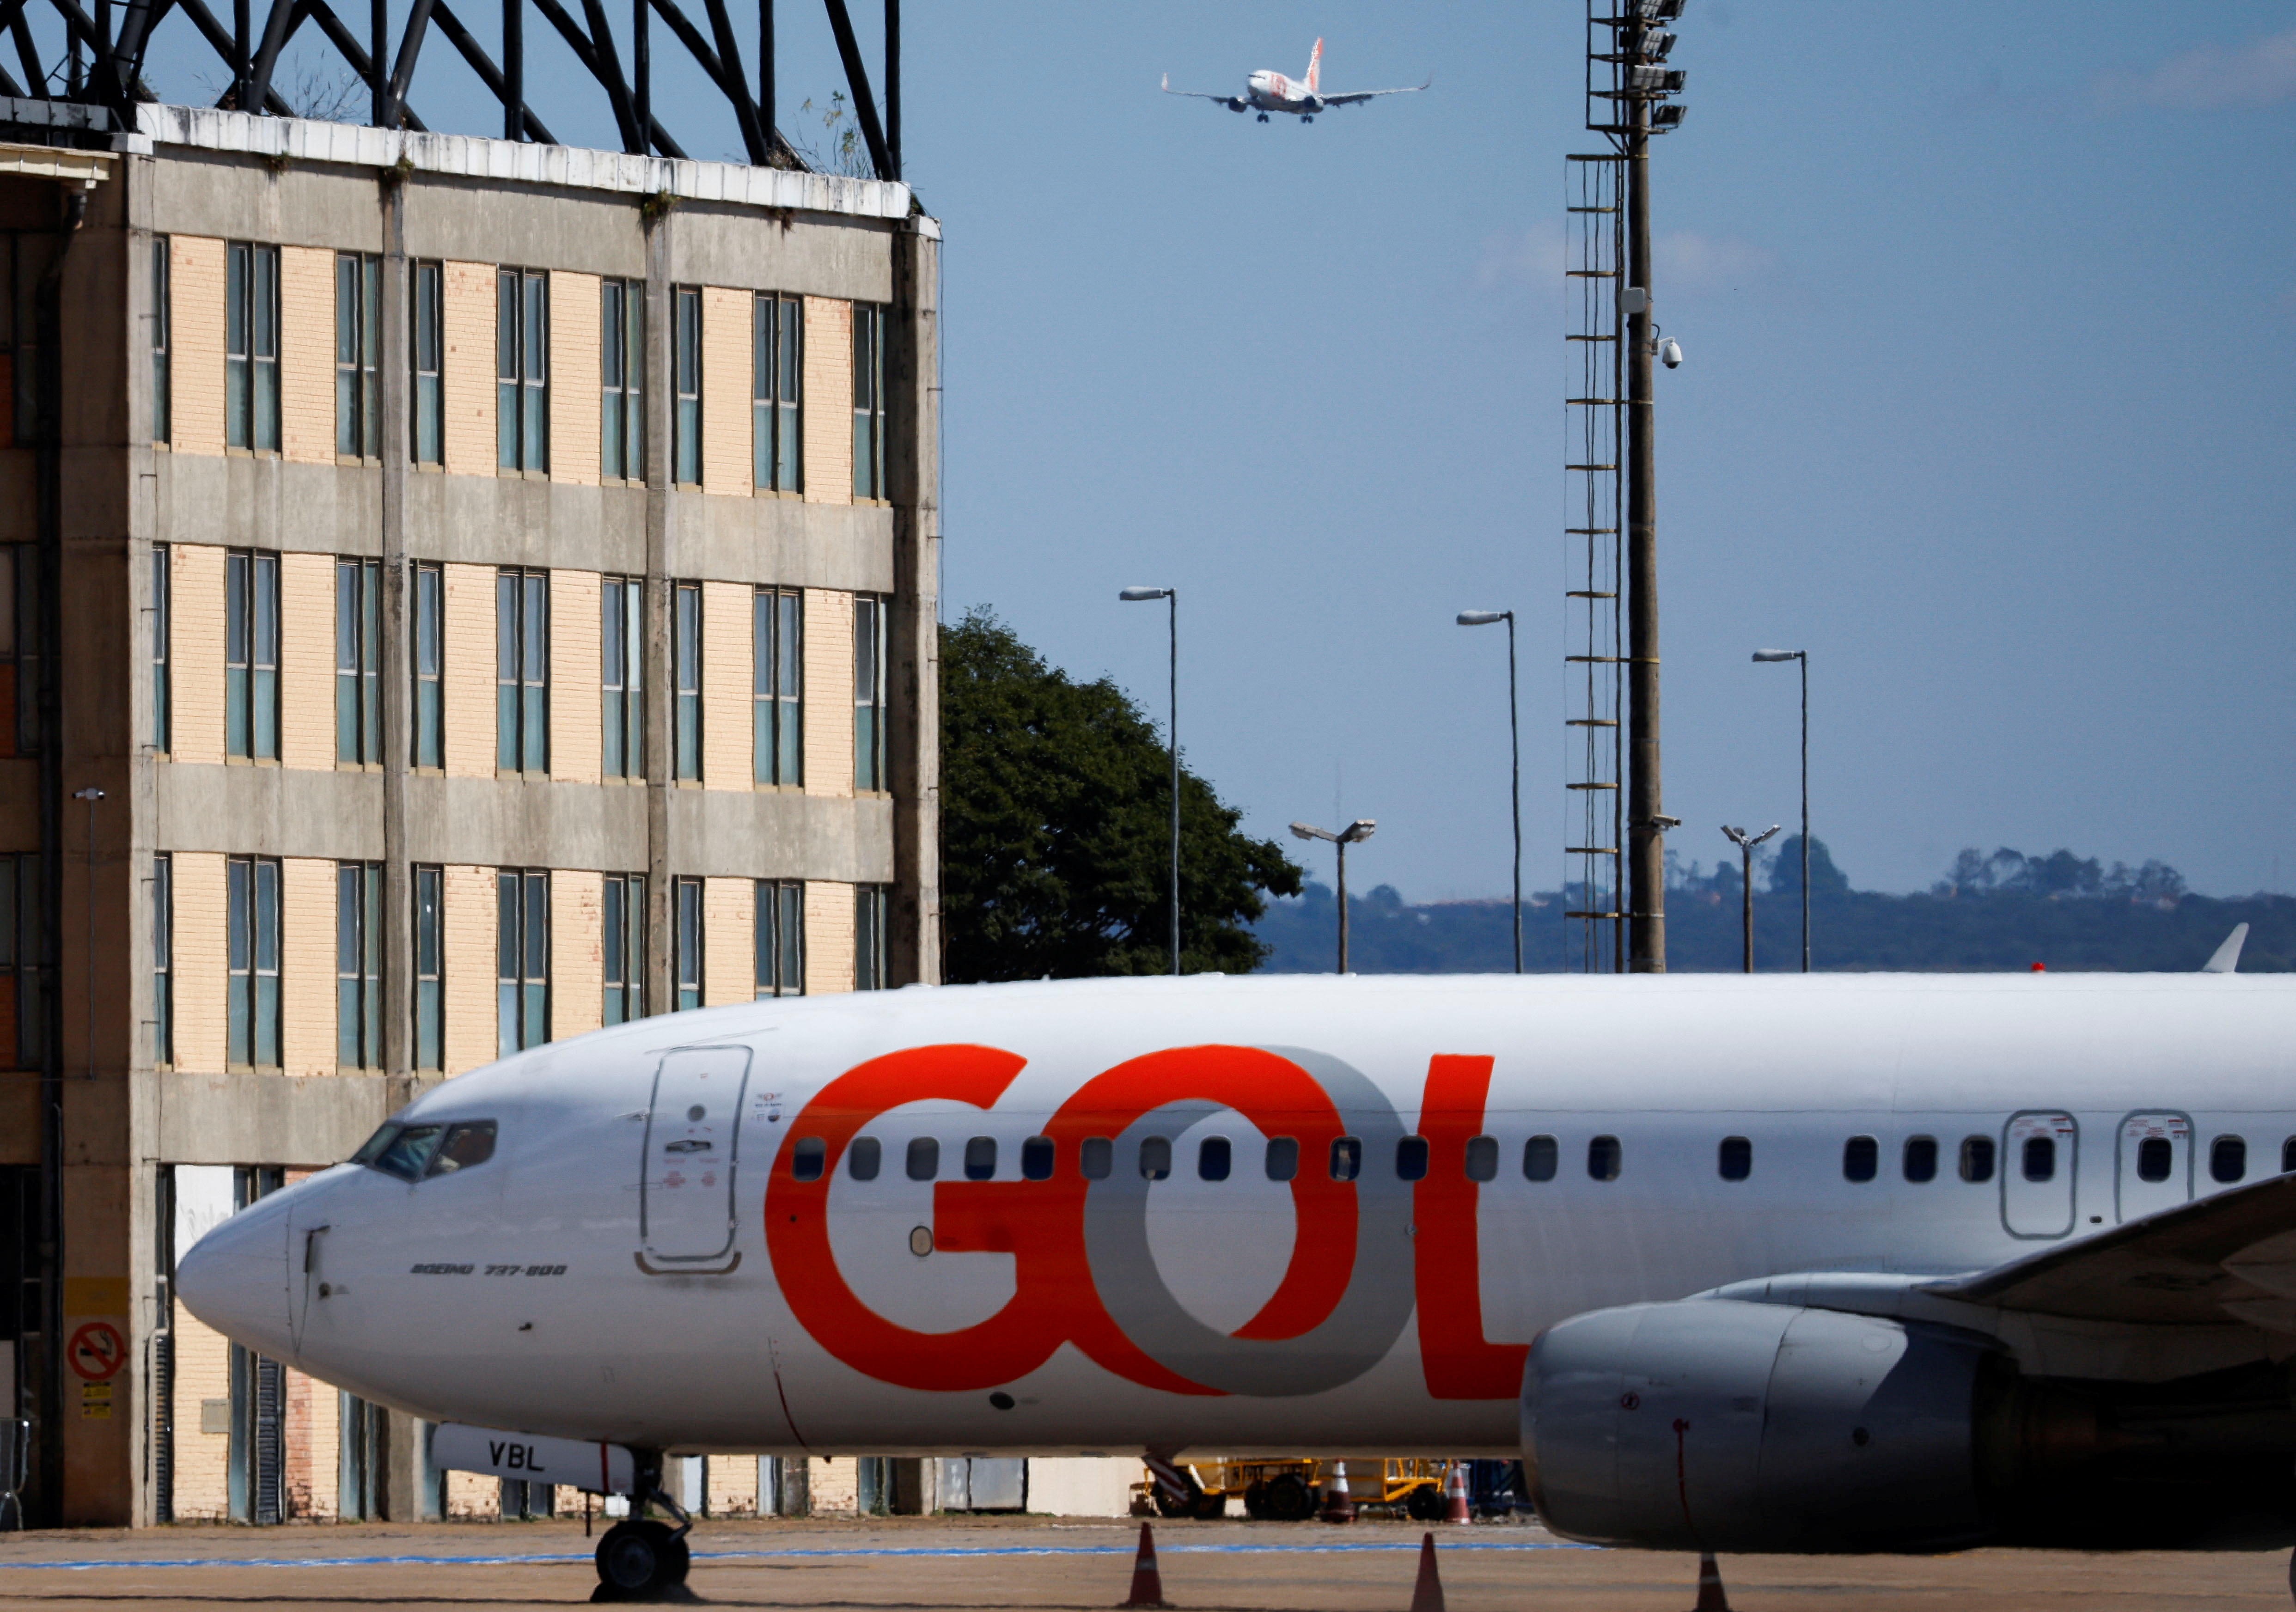 Gol aircraft is seen at Brasilia International Airport